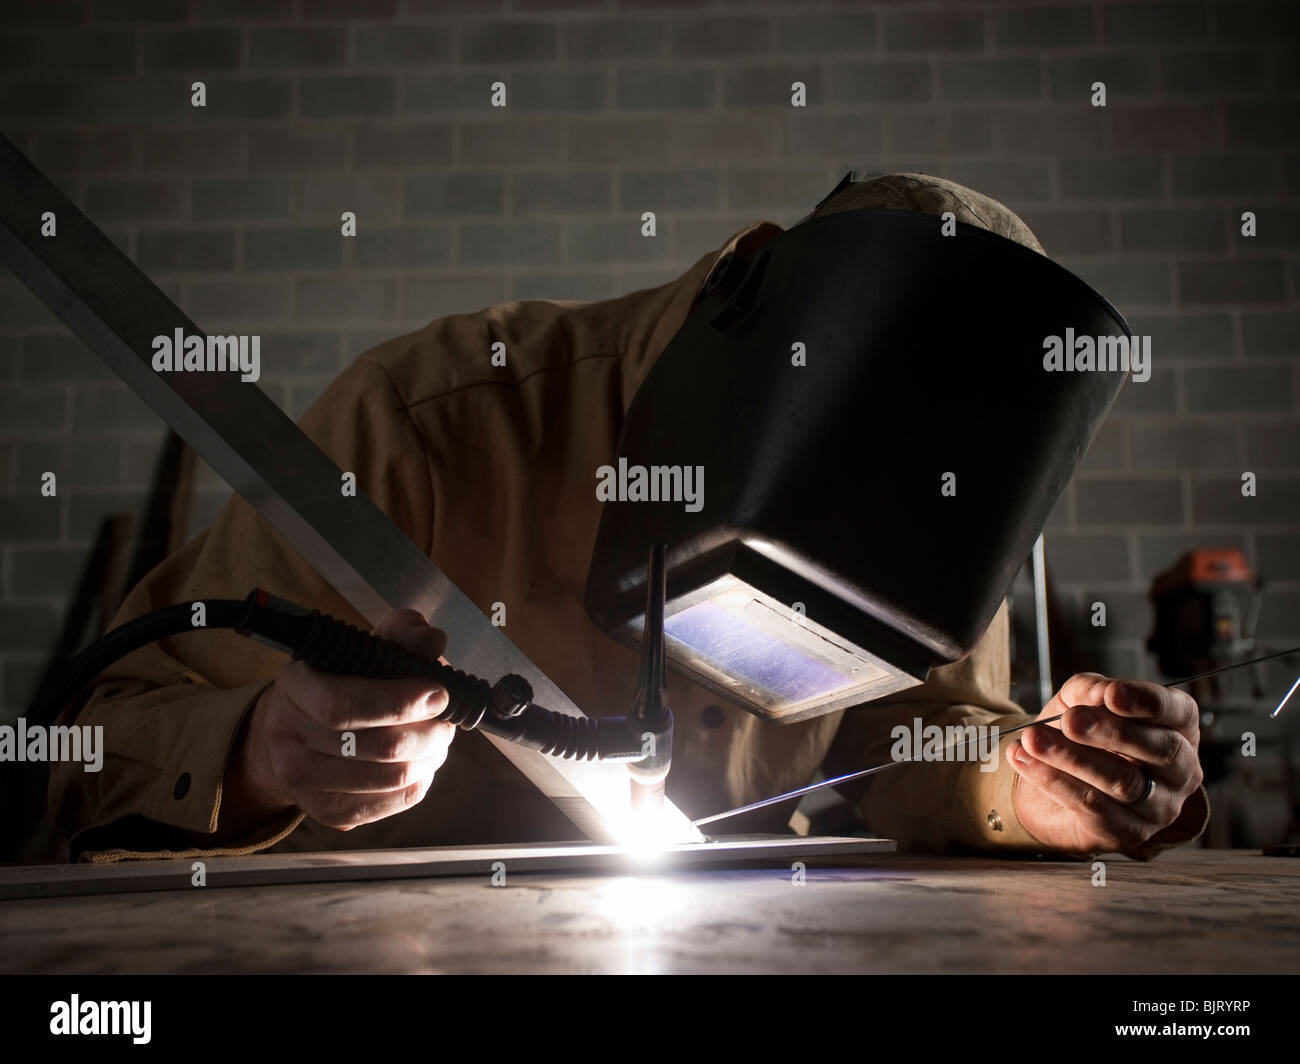 USA, Utah, Orem, welder using torch Stock Photo